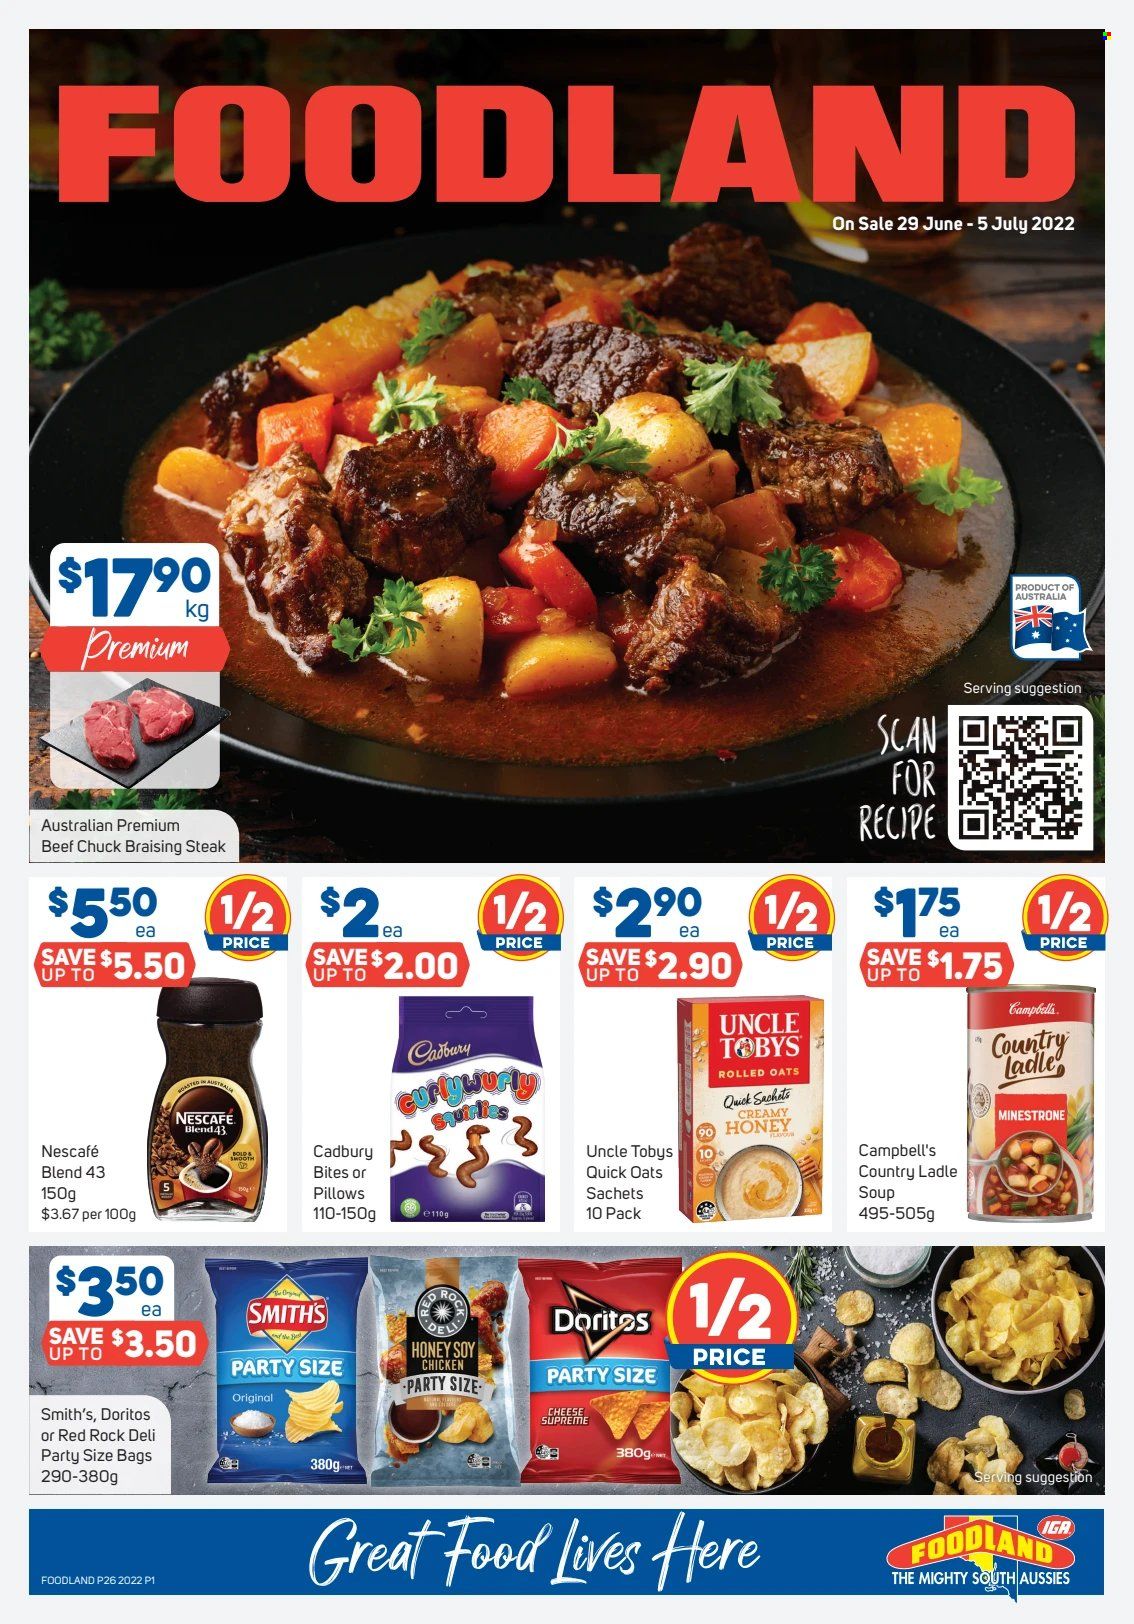 thumbnail - Foodland Catalogue - 29 Jun 2022 - 5 Jul 2022 - Sales products - Campbell's, soup, Cadbury, Doritos, Smith's, oats, rolled oats, Quick Oats, honey, Nescafé, steak. Page 1.